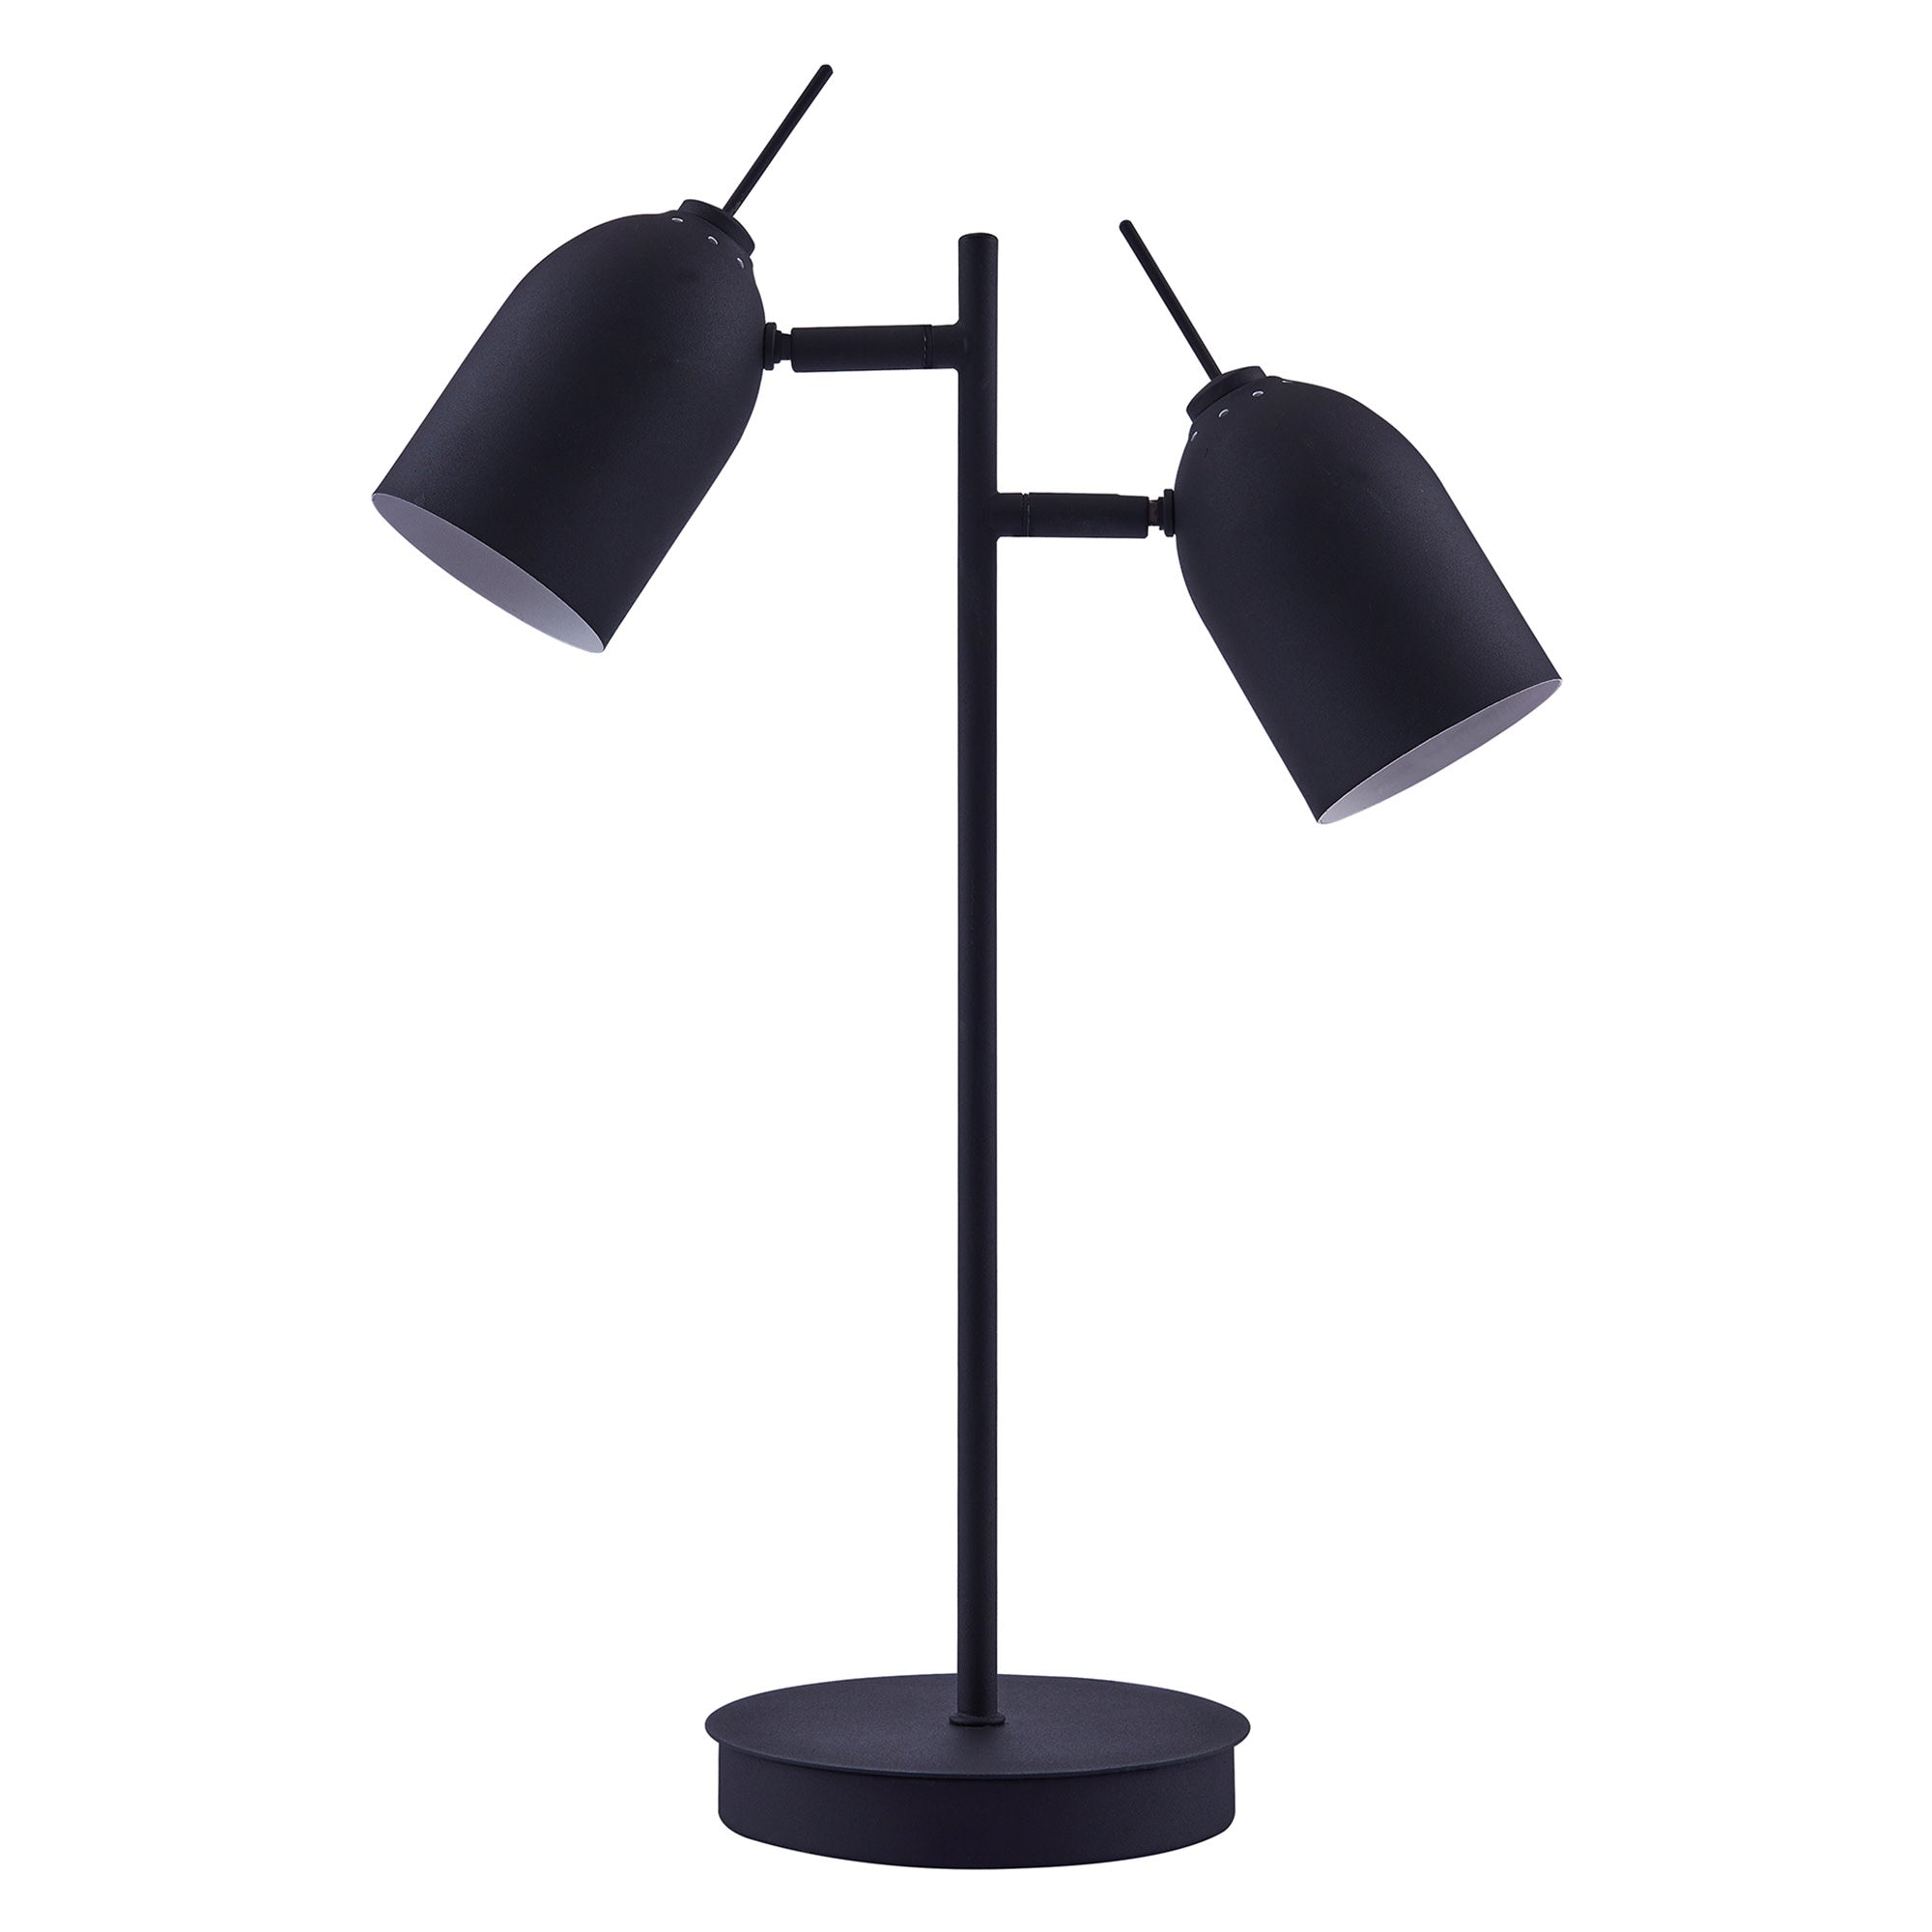 Teamson Home Mason Modern Double Light Adjustable Table Lamp Standing Light Black Shade Finish for Livingroom Bedroom Office Home